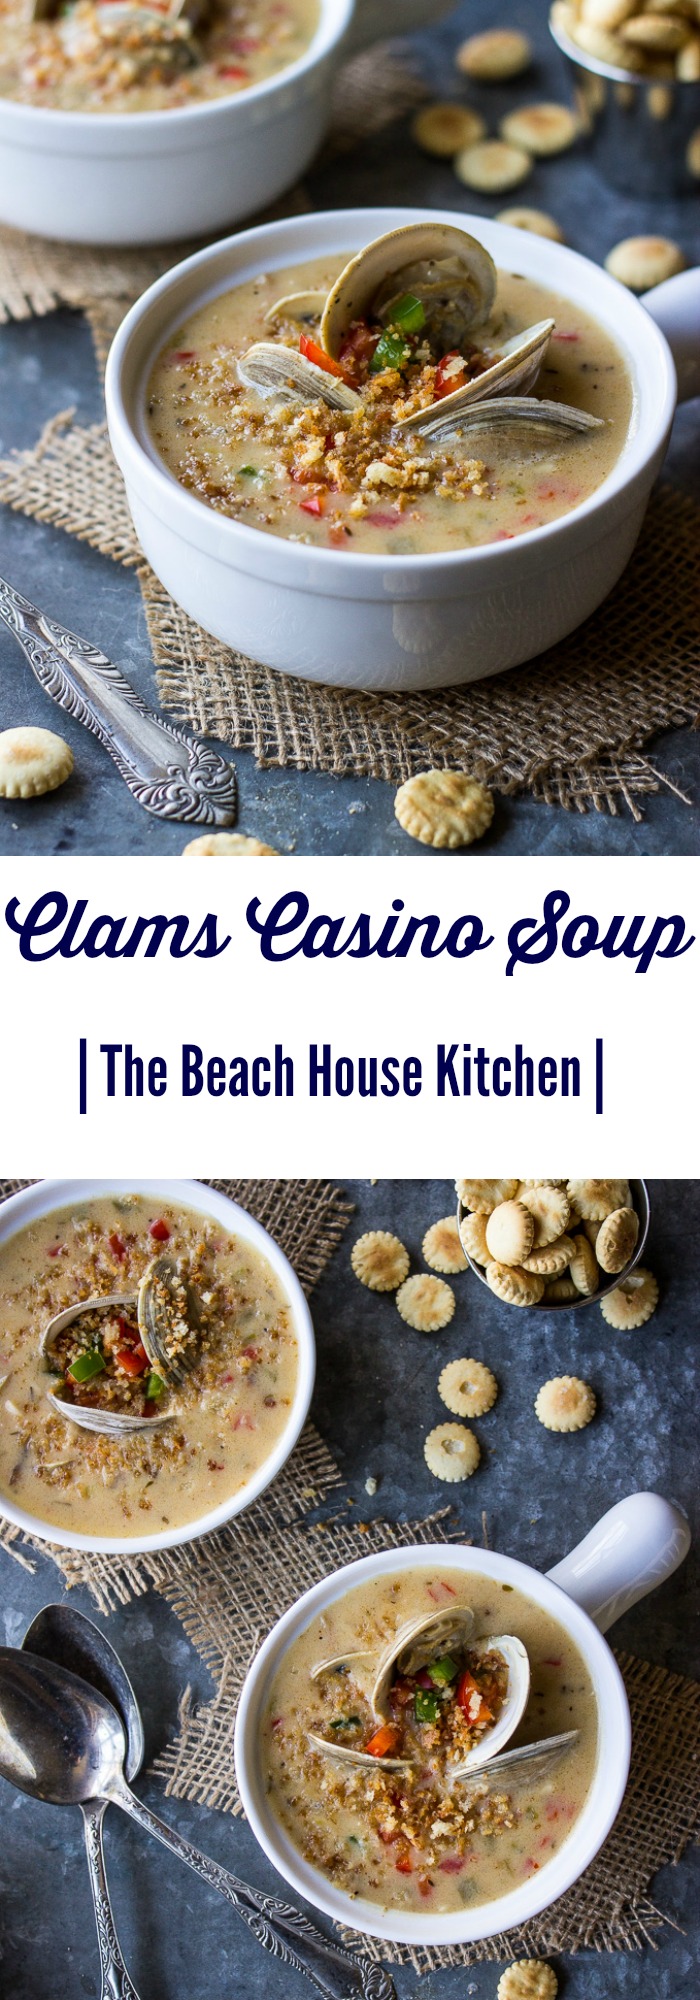 Clams Casino Soup